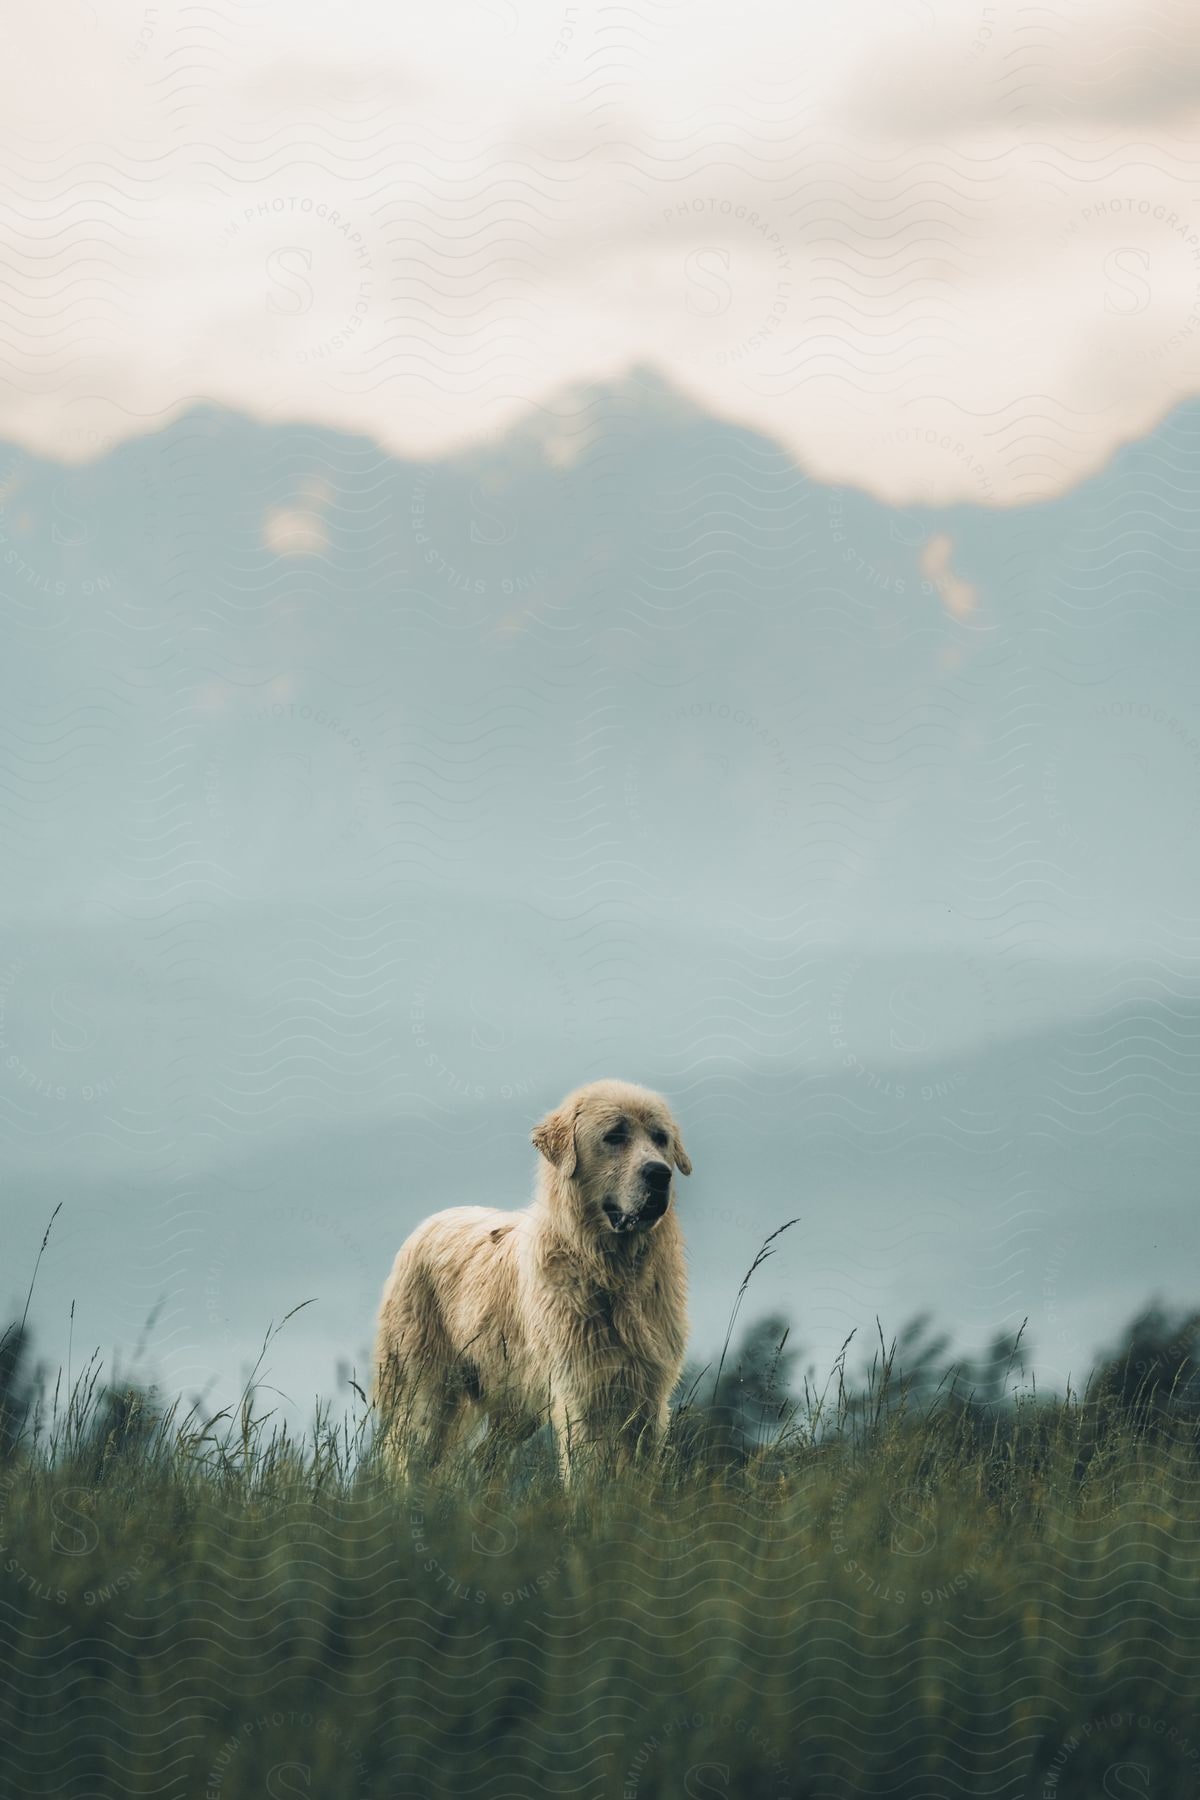 A dog amidst tall grass with misty mountains under an overcast sky